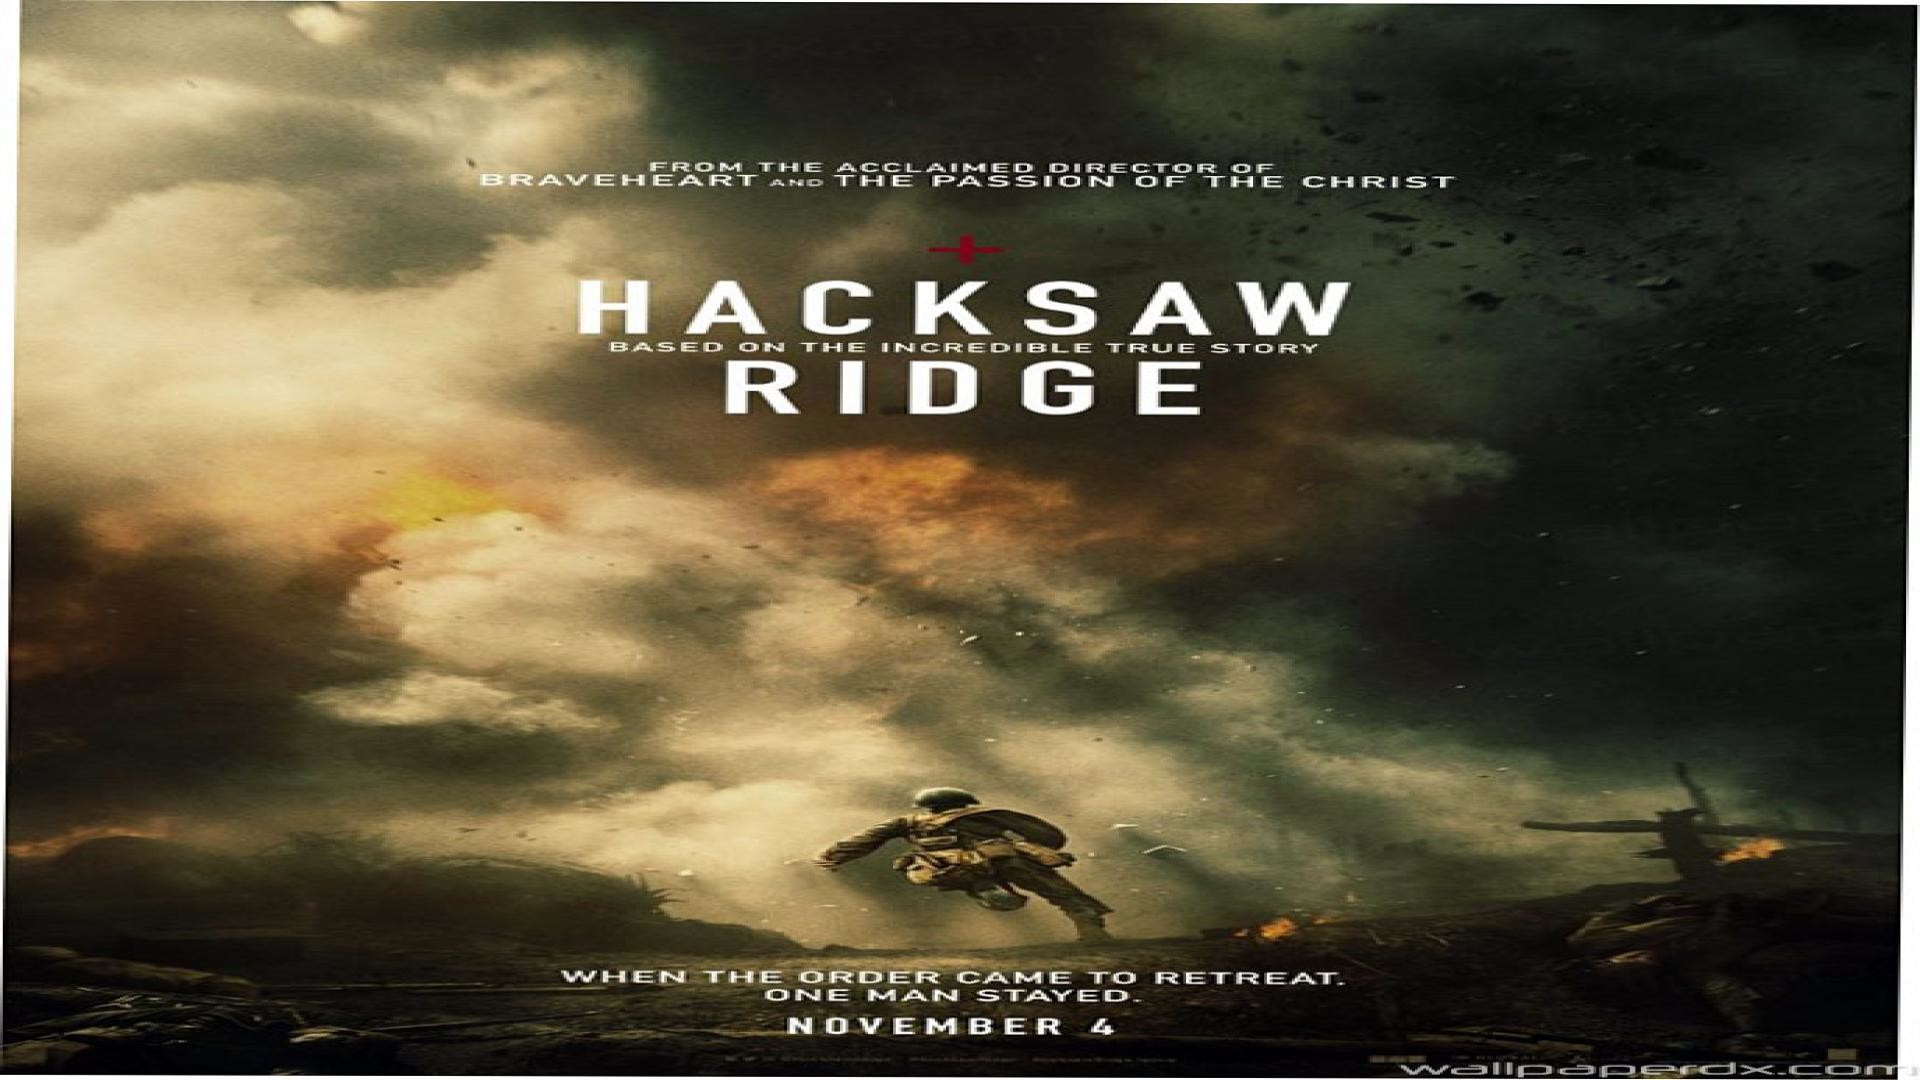 1920x1080 hacksaw ridge 2016 movie poster - 1920 x 1080